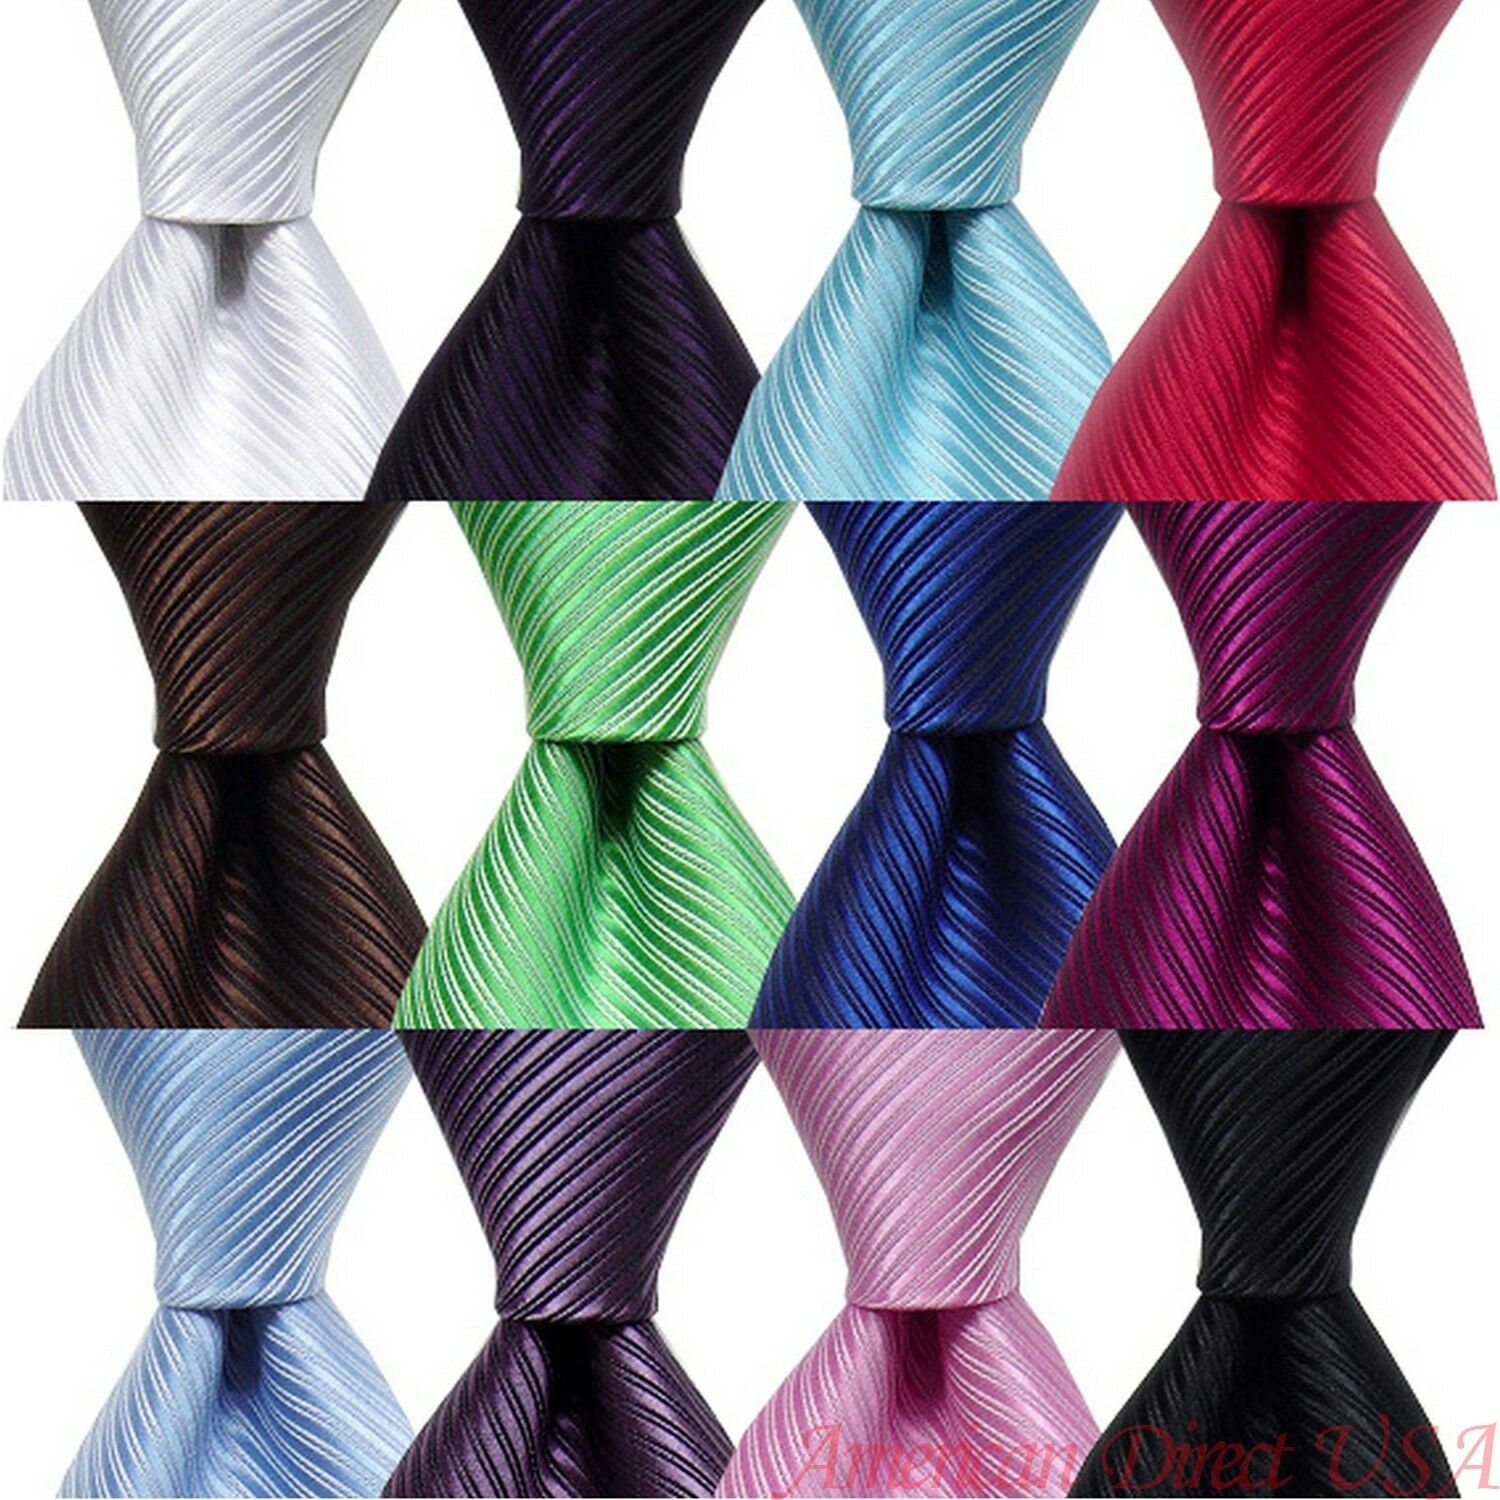 New Fashion Classic Striped Tie Jacquard Woven Men's Silk Suits Ties Necktie